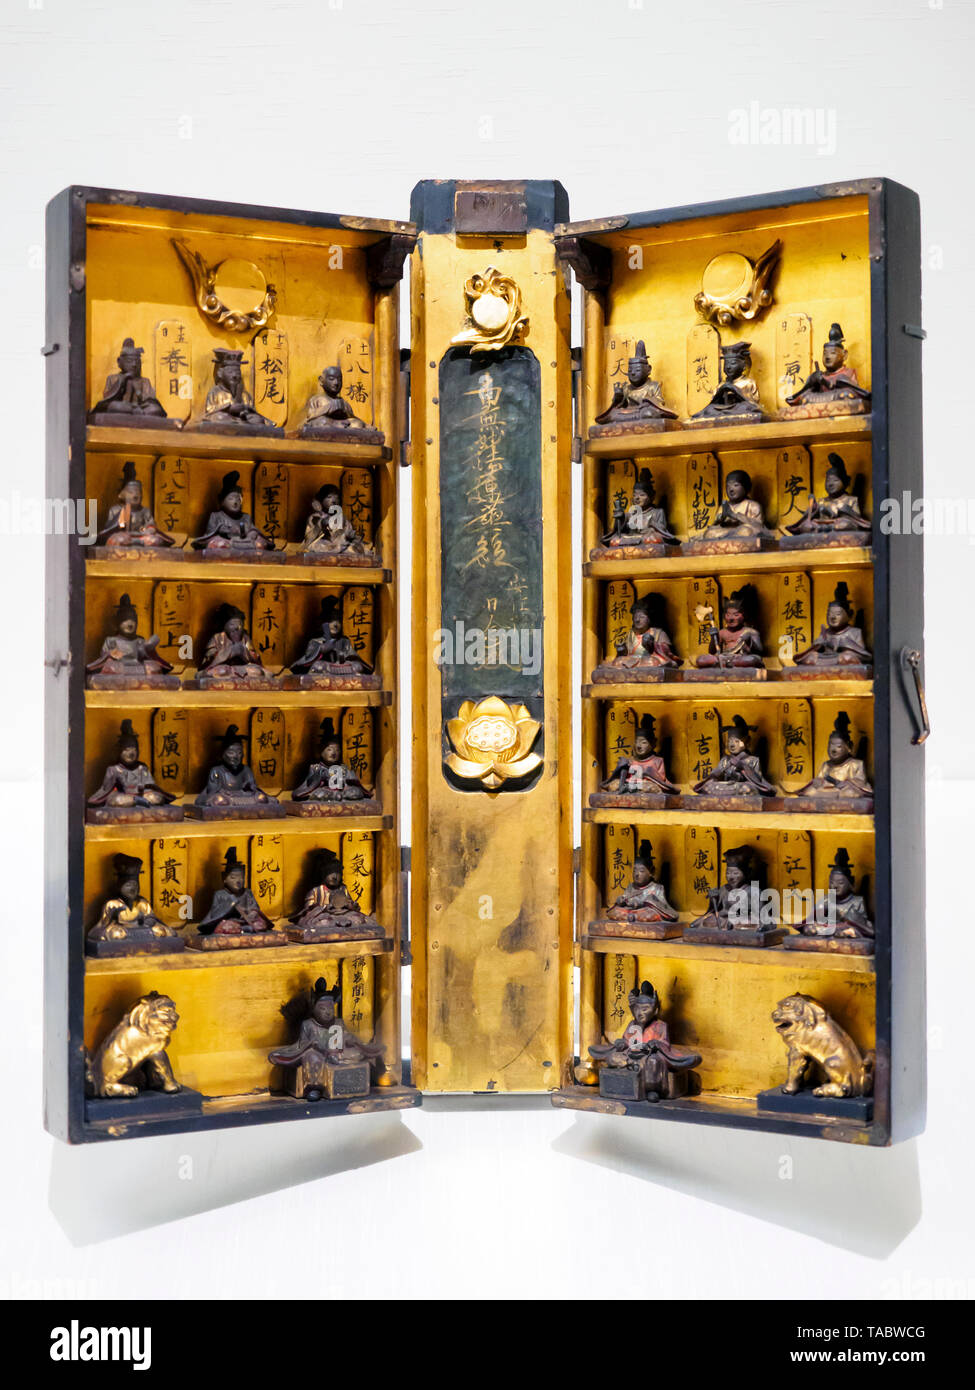 Portable shrine with 30 kami deities Stock Photo